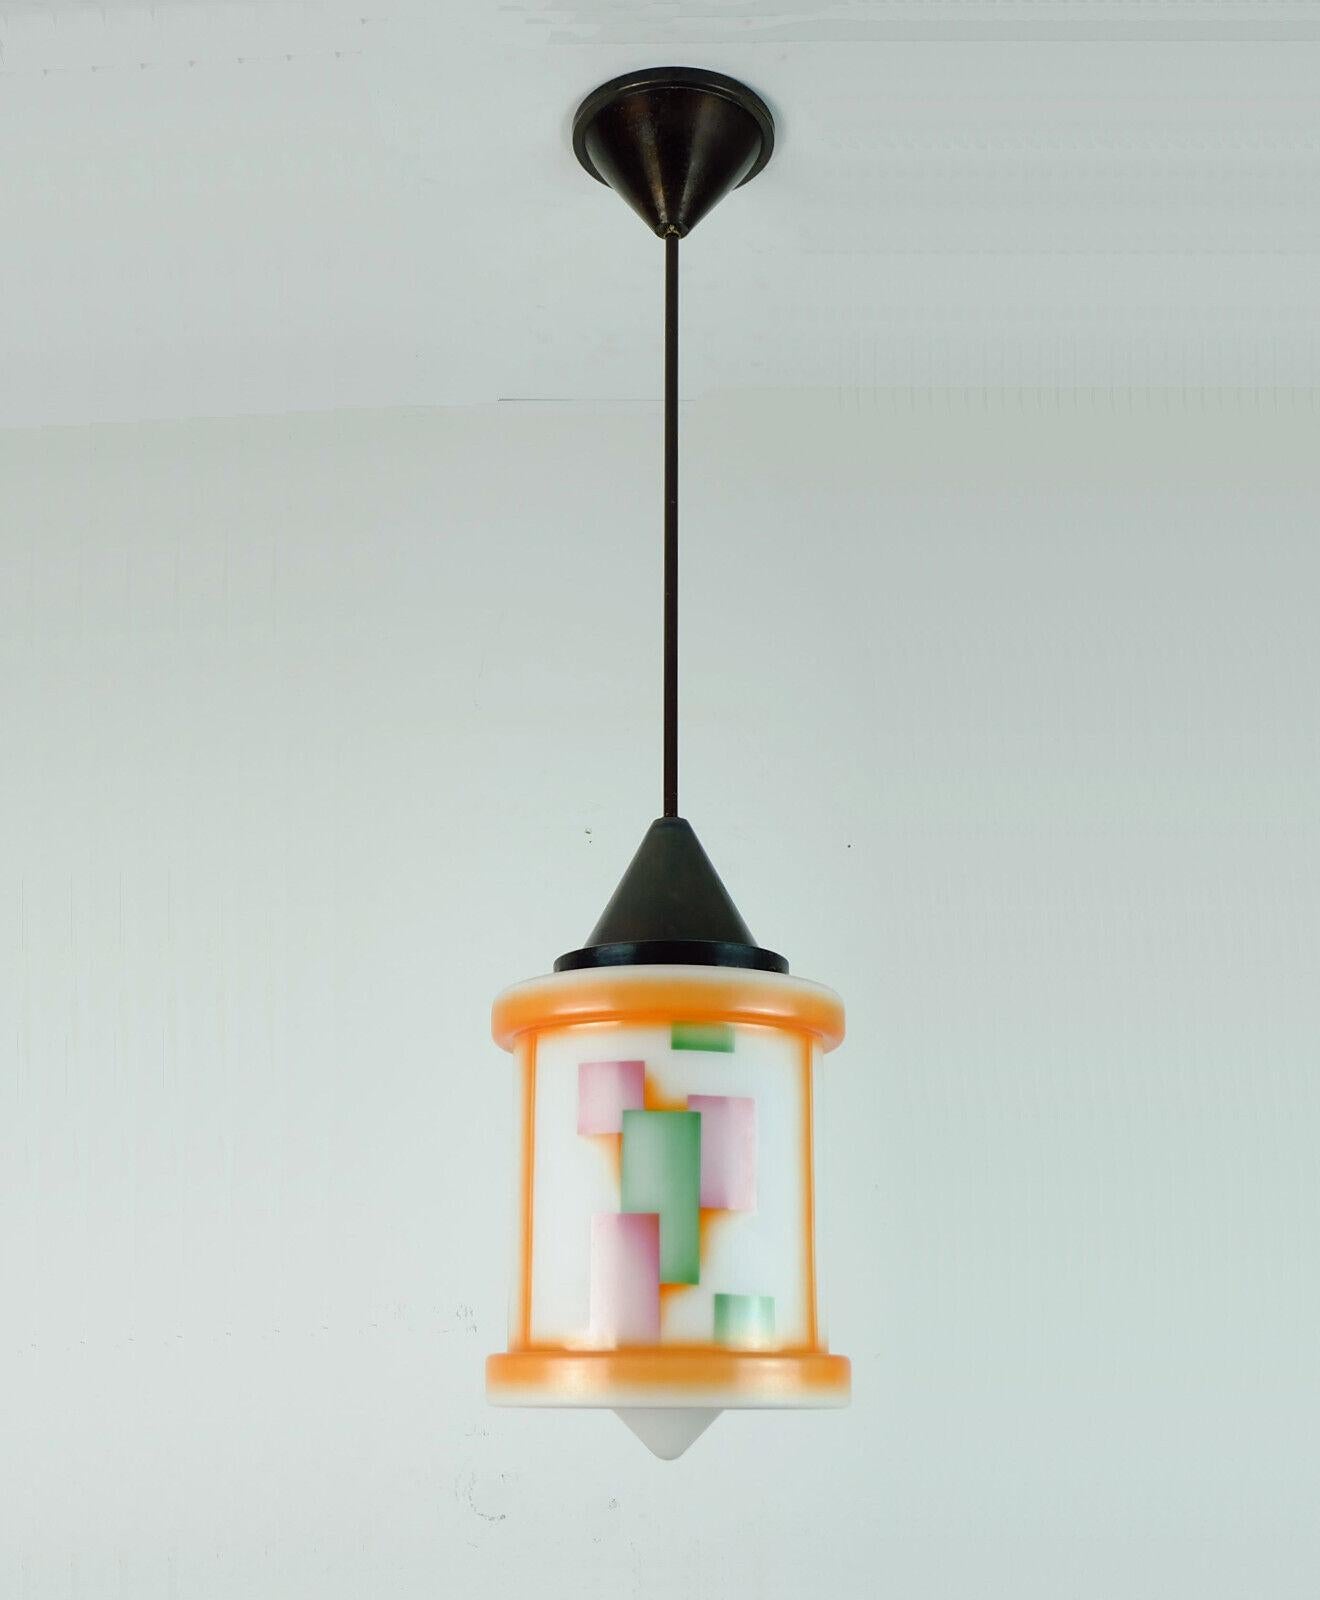 Larart Déco Glass Pendant Light Airbrush Design In Good Condition For Sale In Mannheim, DE